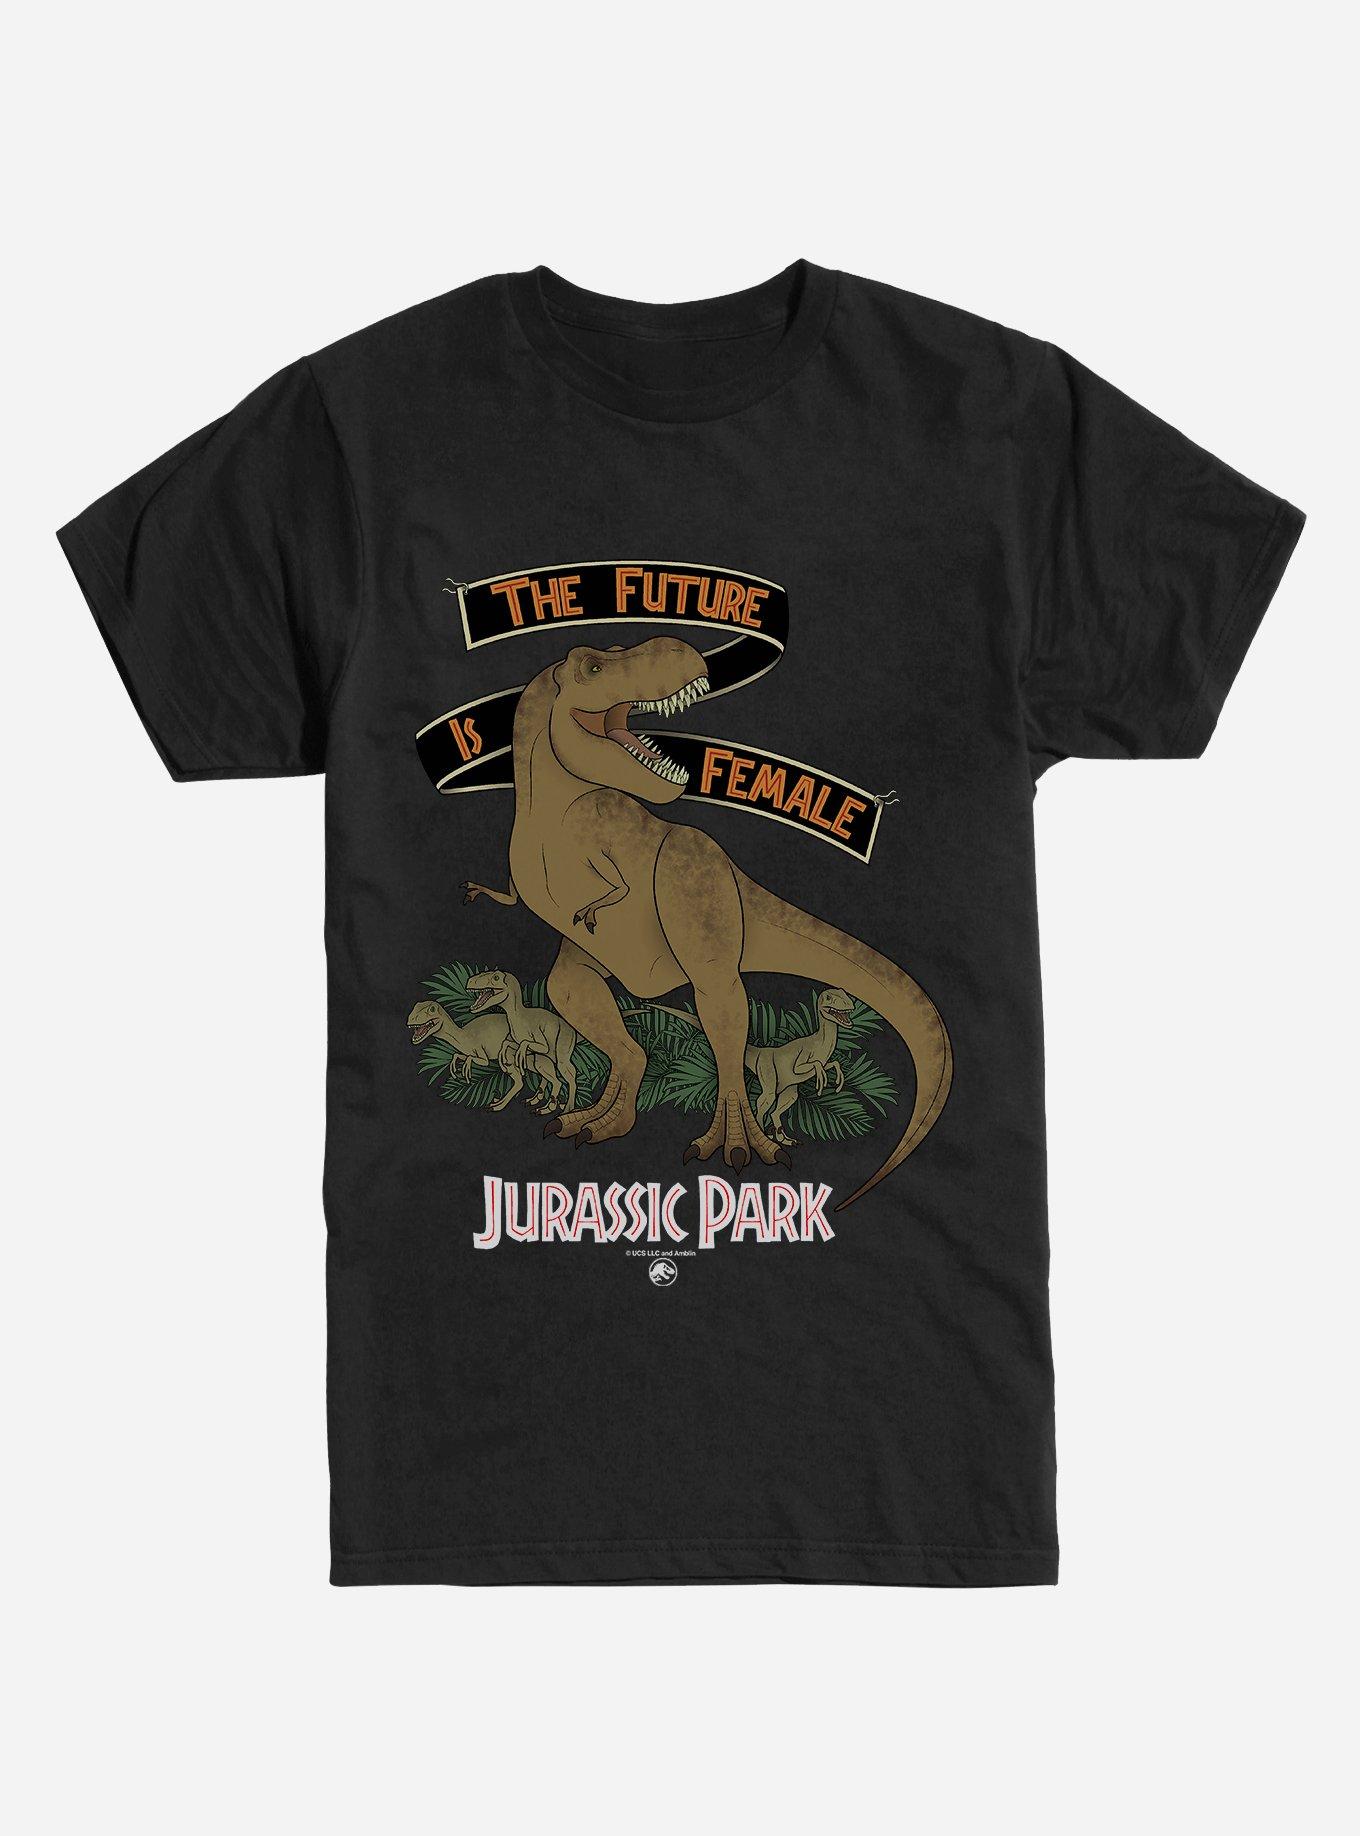 Jurassic Park The Future Is Female White T-Shirt | Hot Topic